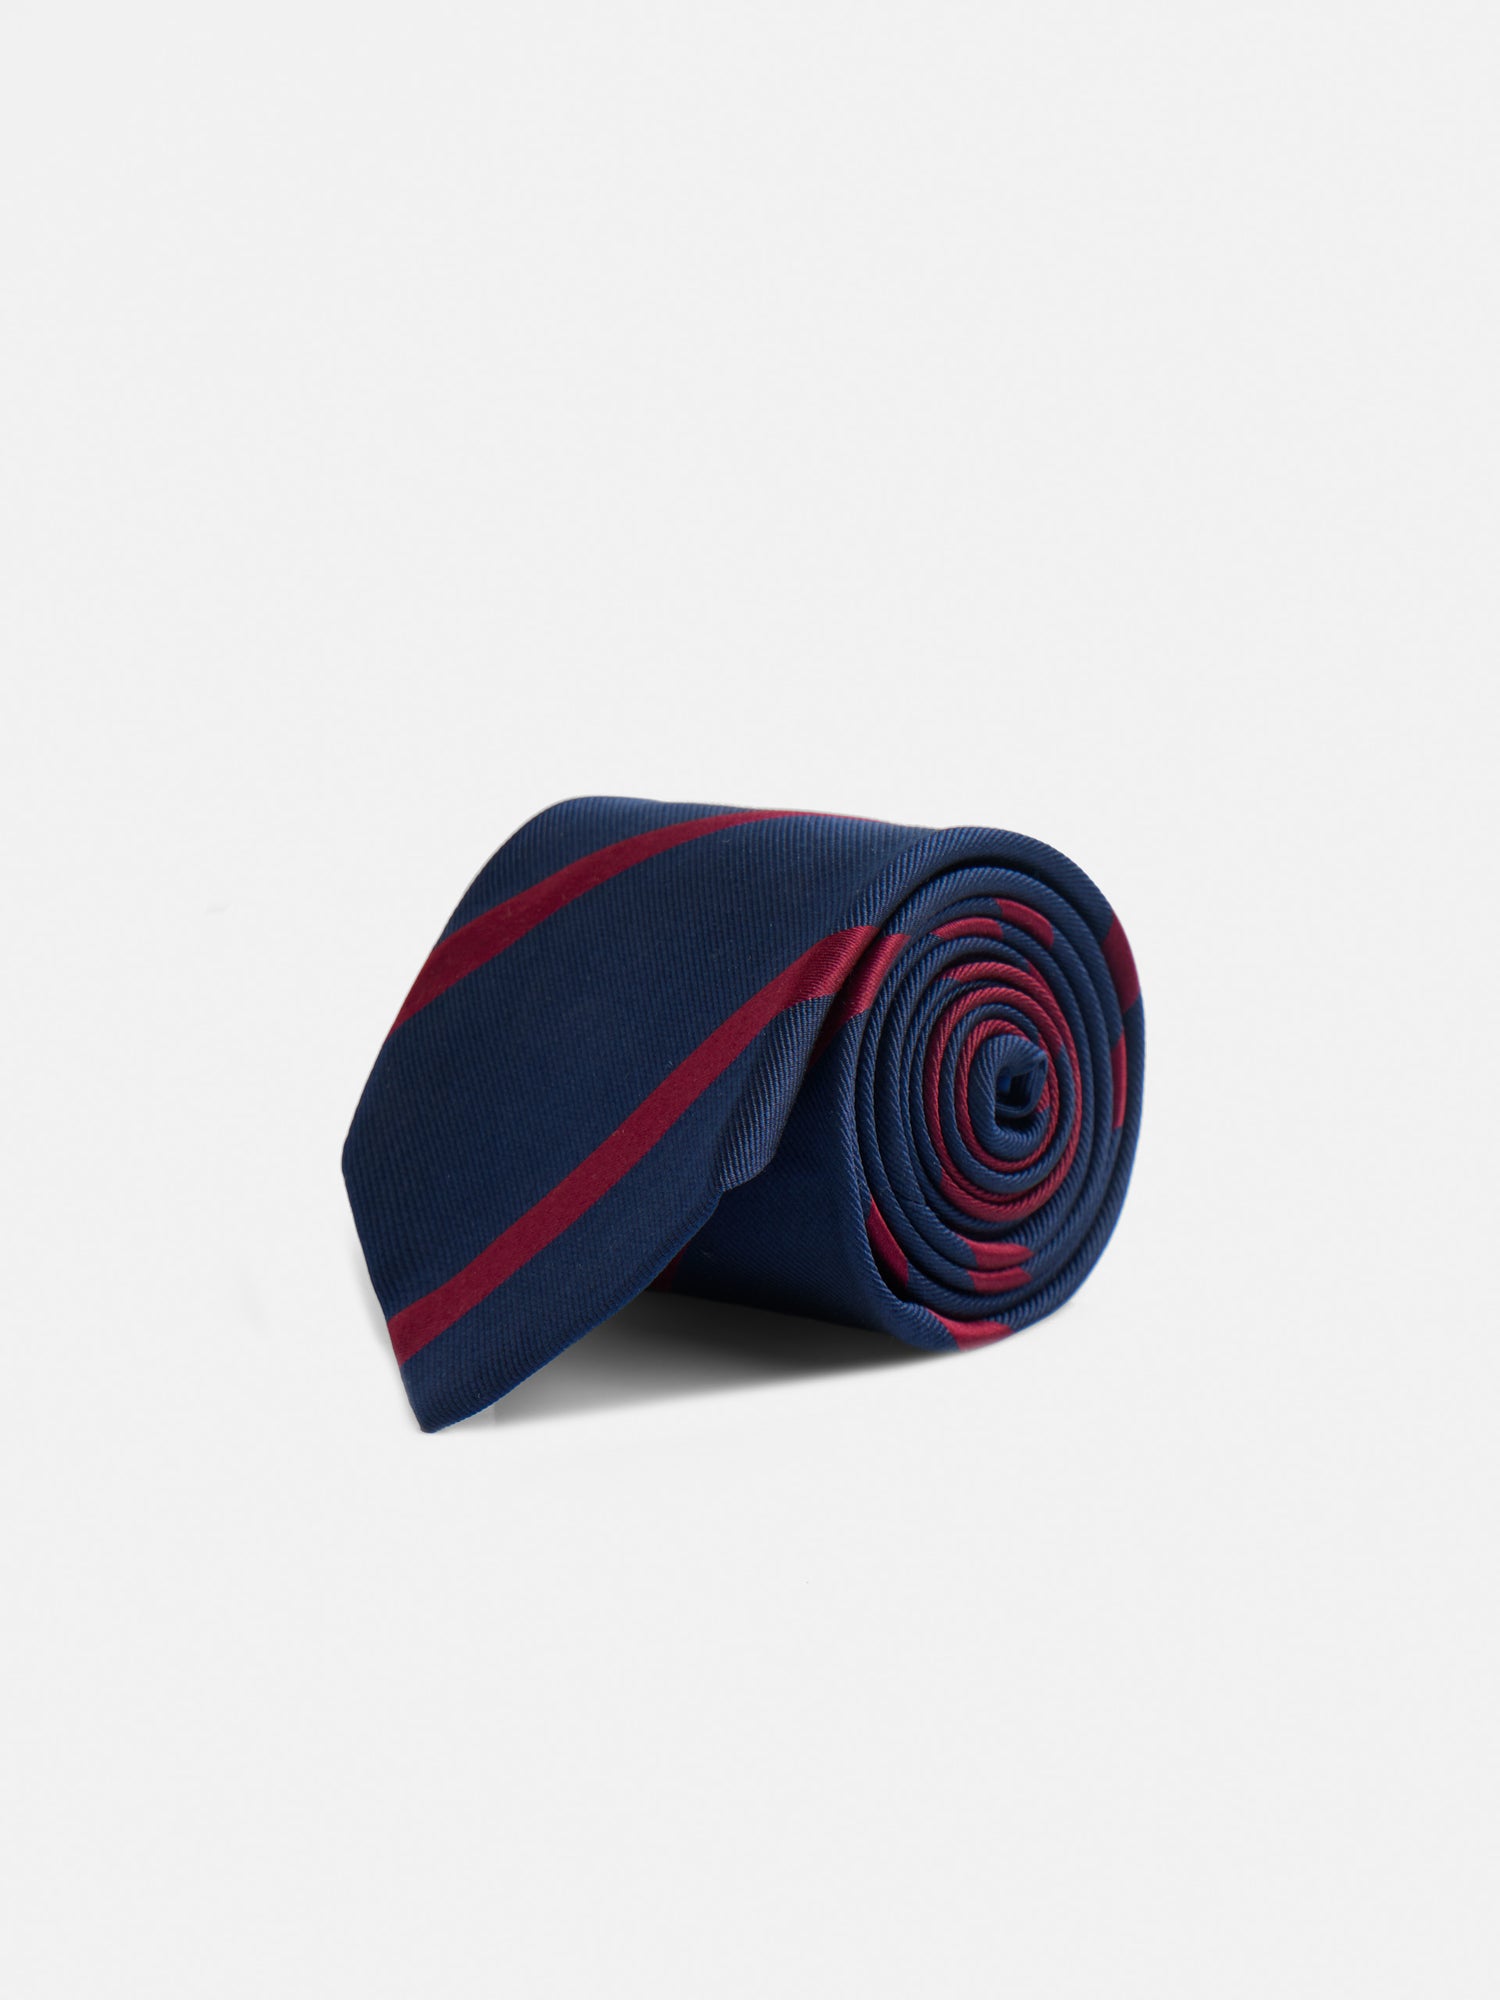 Burgundy striped navy tie